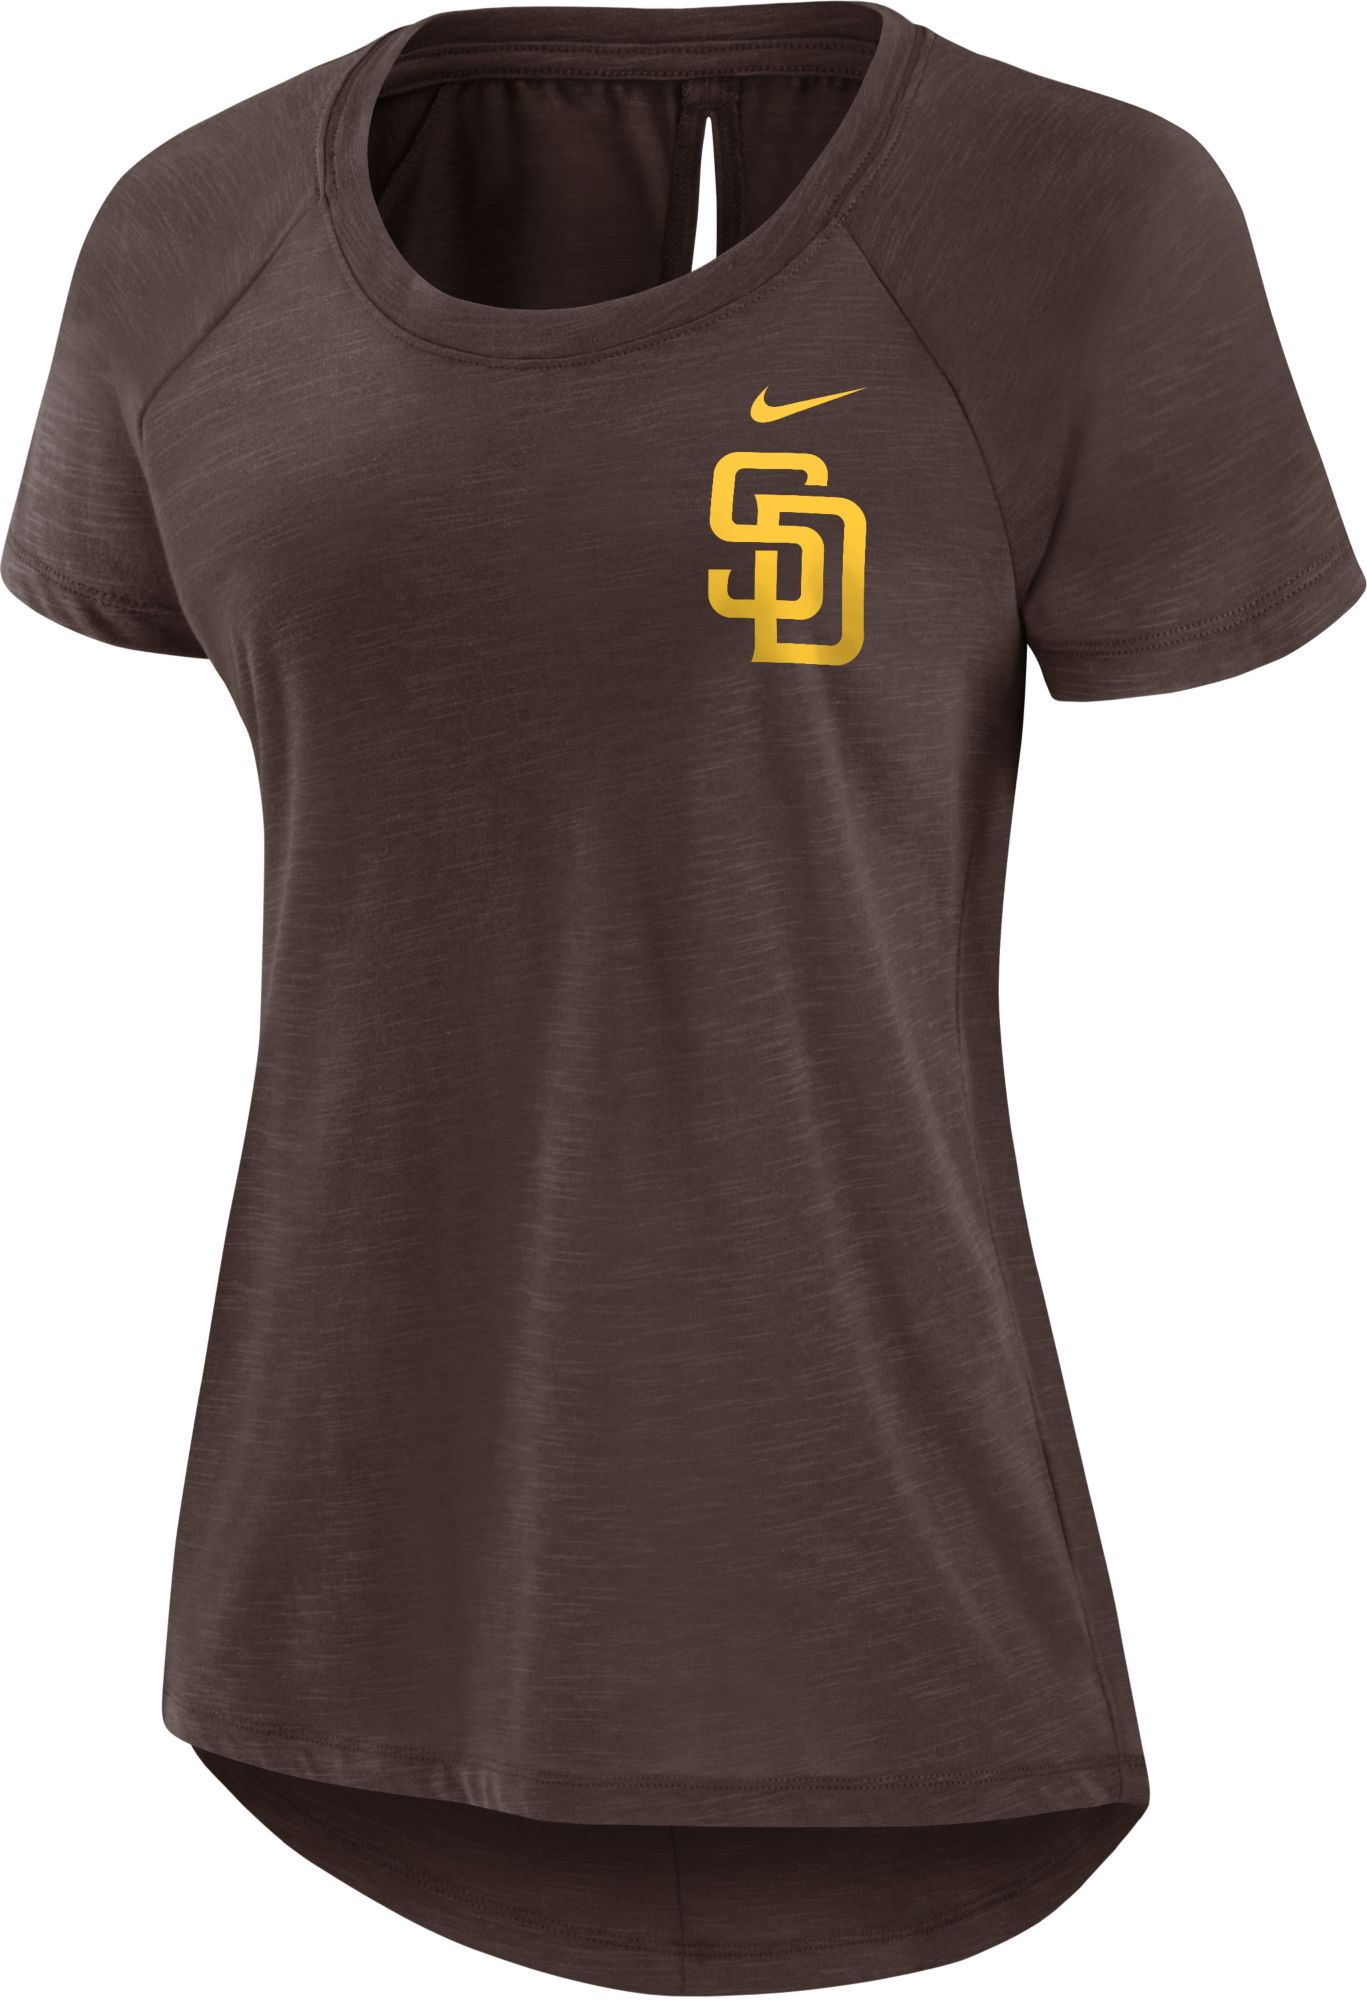 Nike / Women's San Diego Padres Brown Summer Breeze T-Shirt